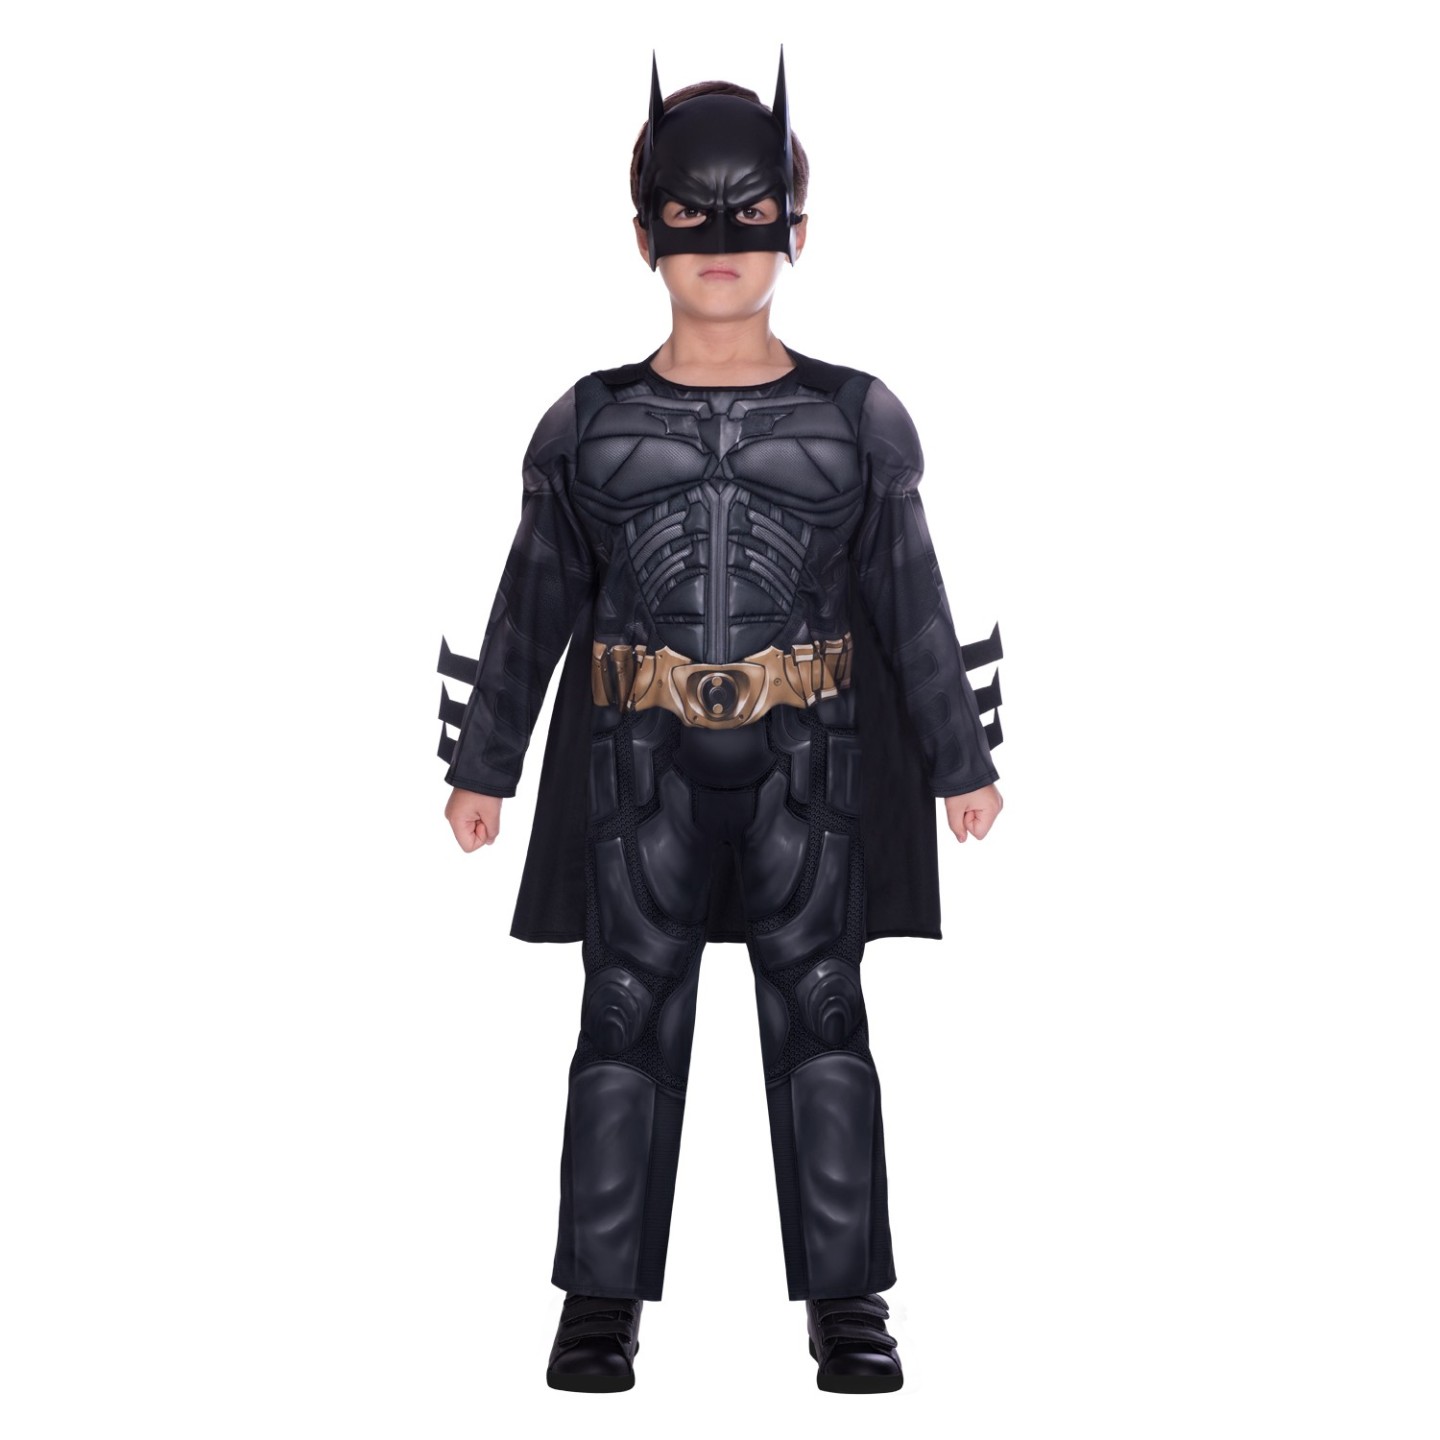 Ruwe olie Dokter Wakker worden Batman kostuum kind | Jokershop.be - Superhelden kleding